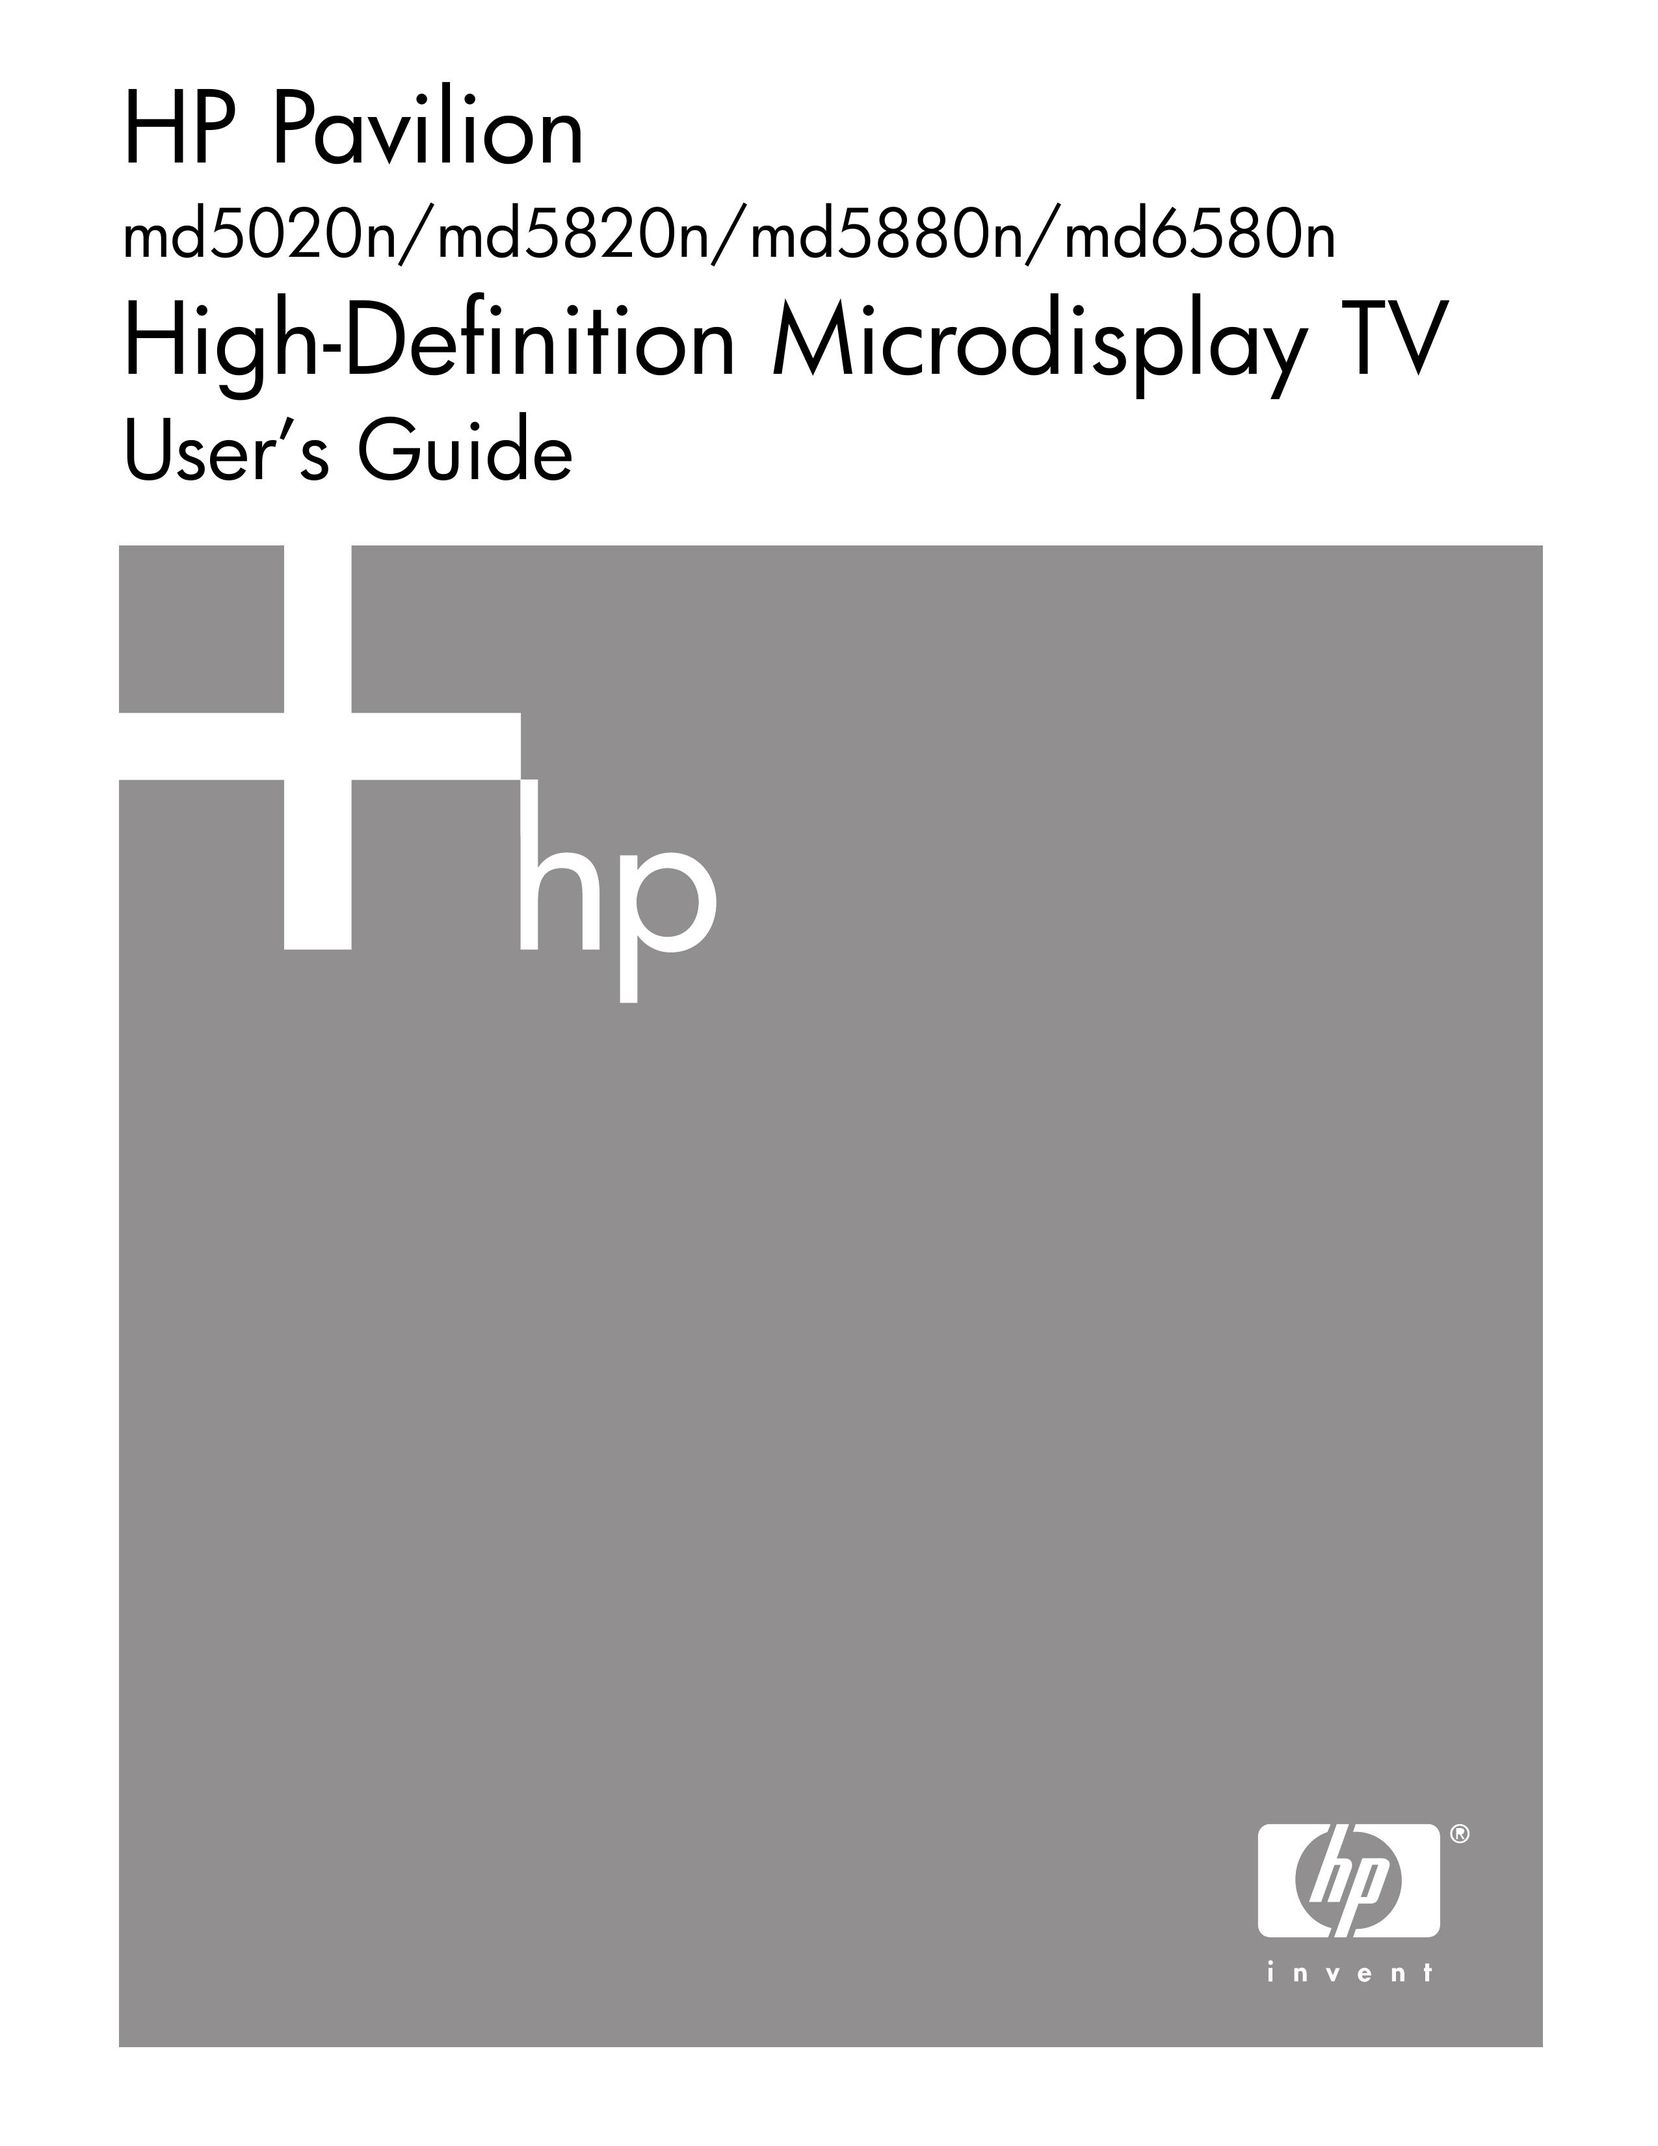 HP (Hewlett-Packard) md5820n Flat Panel Television User Manual